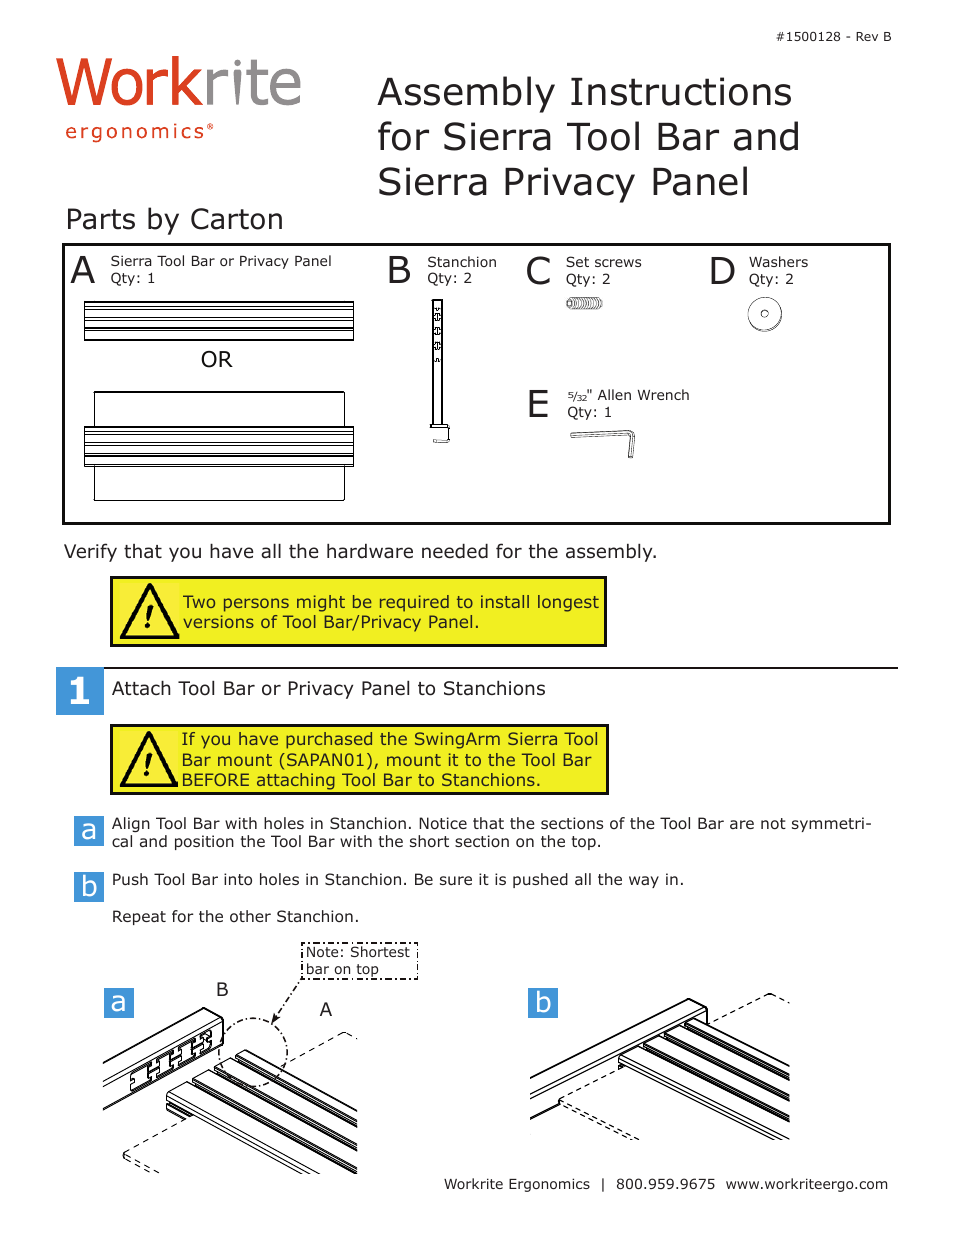 Sierra Privacy Panel